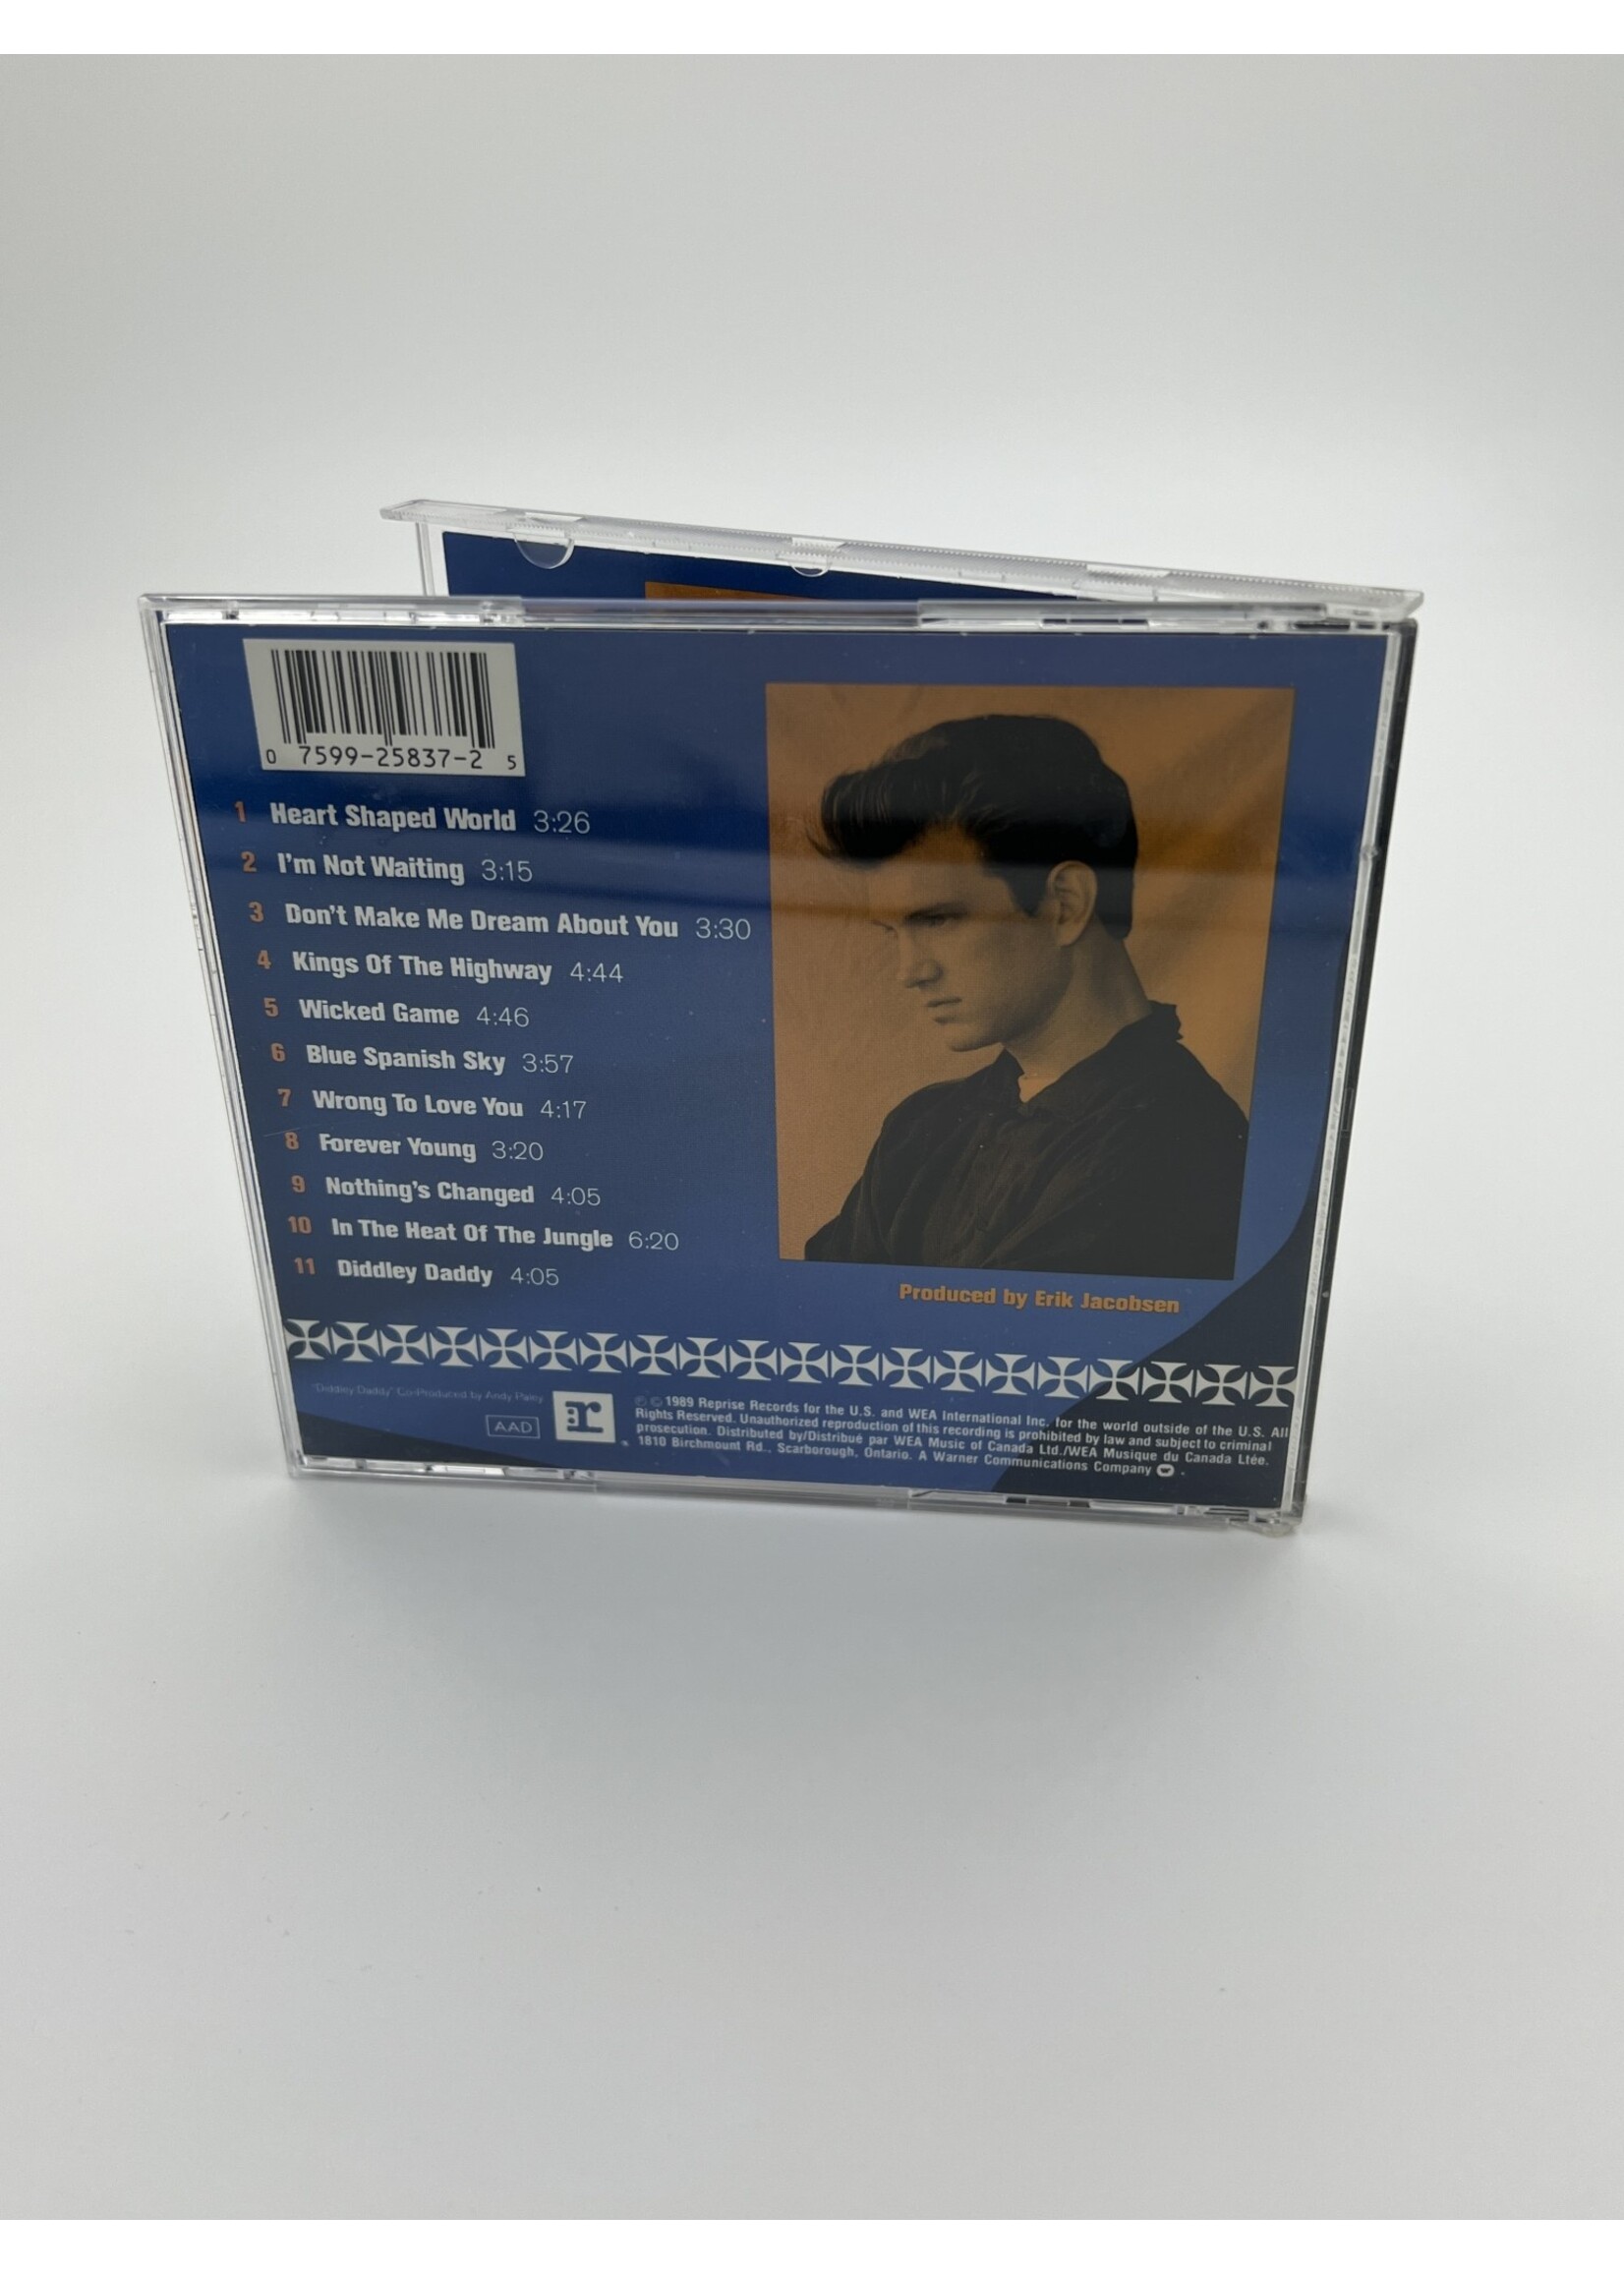 CD Chris Isaak Heart Shaped World CD